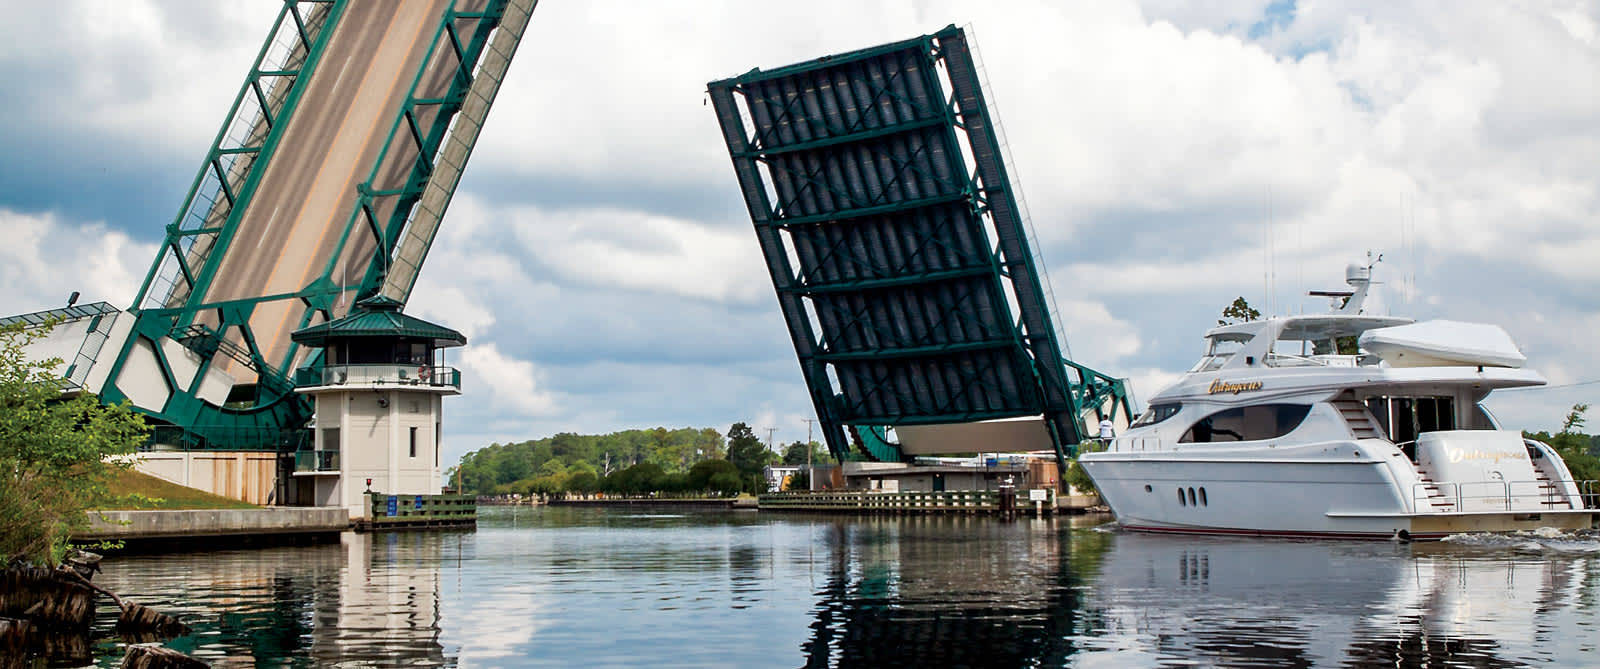 Chesapeake's The Great Bridge Opening Up Background